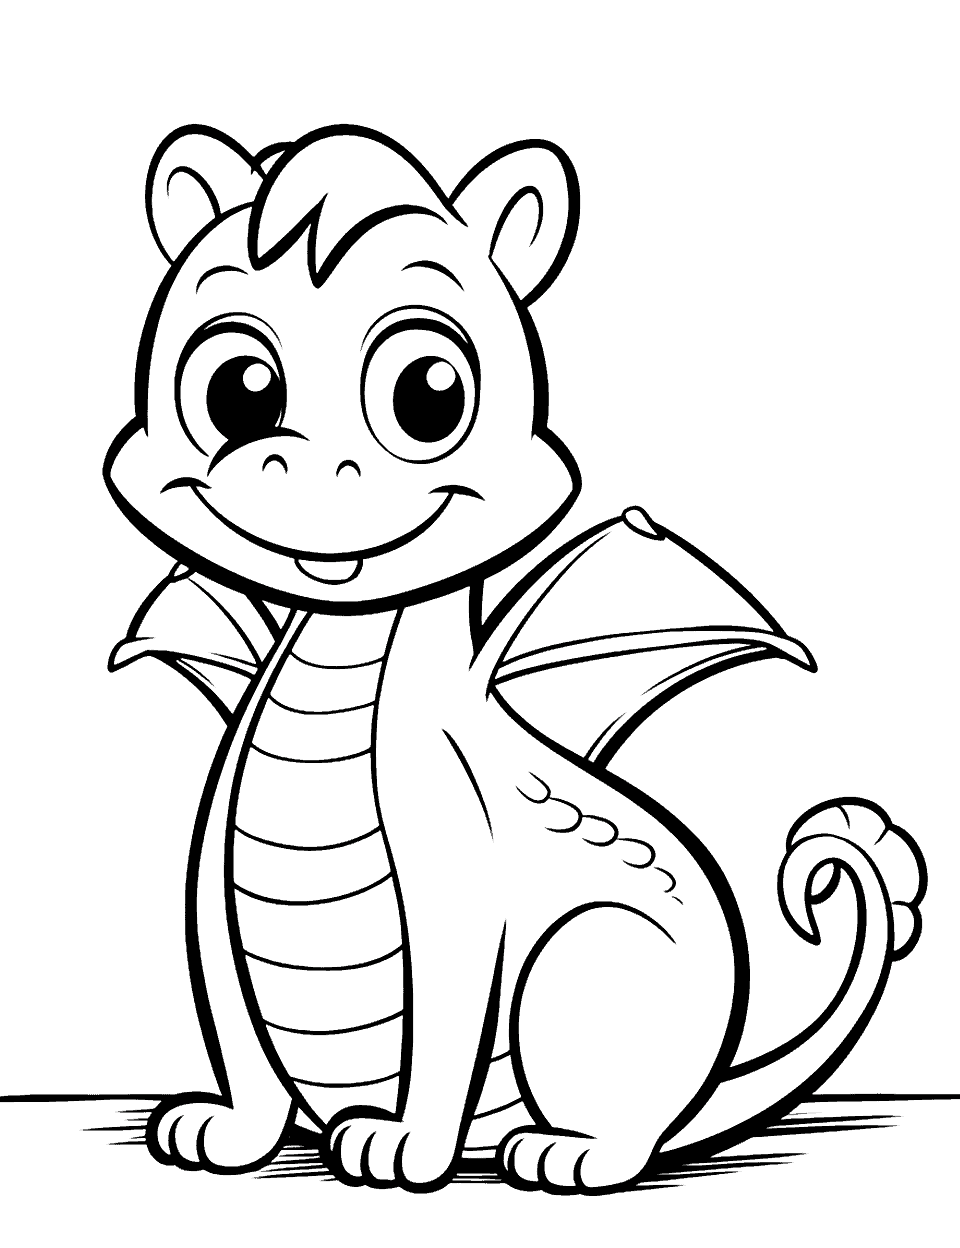 Friendly Dragon Coloring Page - A friendly dragon sitting alone.